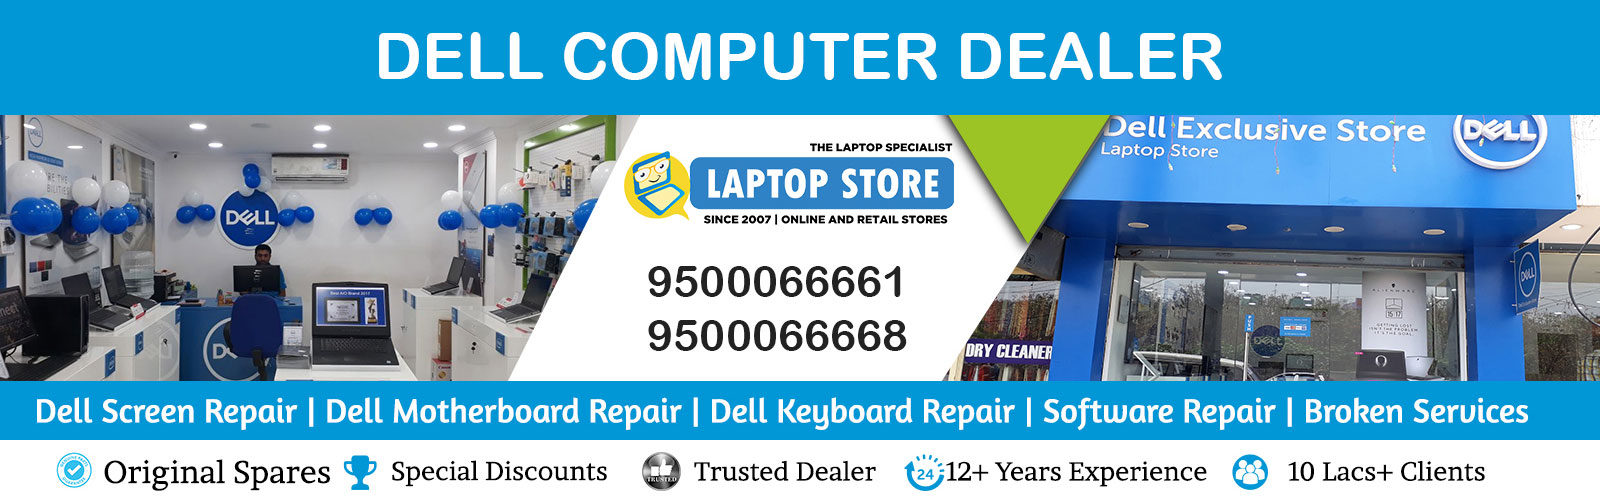 Computer Dealer Banner